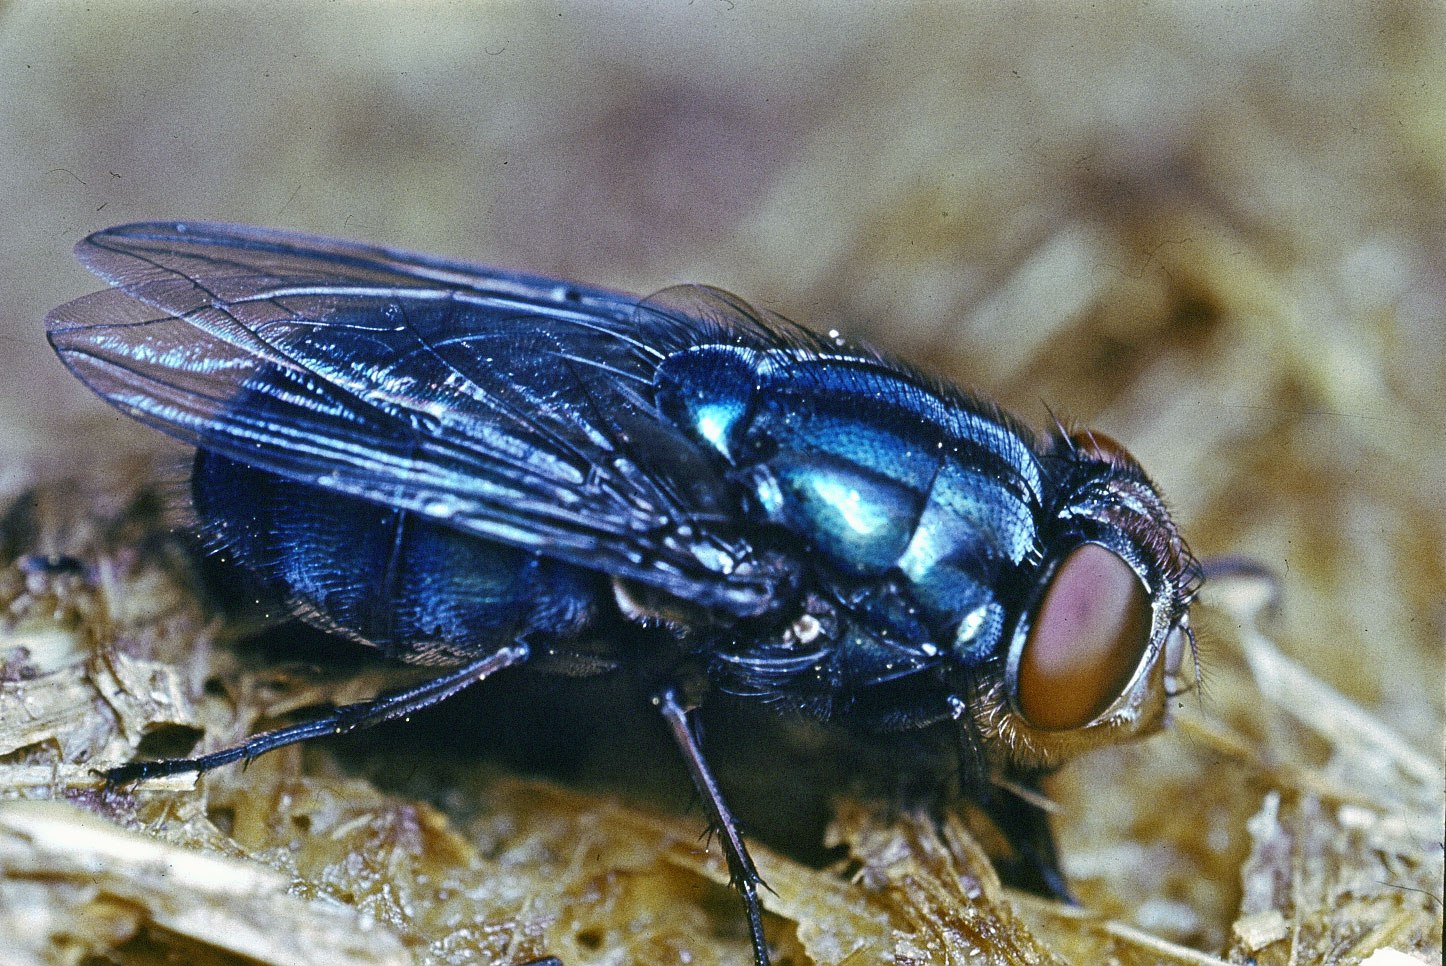 Змей муха. Муха синяя мясная (Calliphora uralensis). Синяя навозная Муха. Calliphoridae Муха. Муха семейства Calliphoridae.